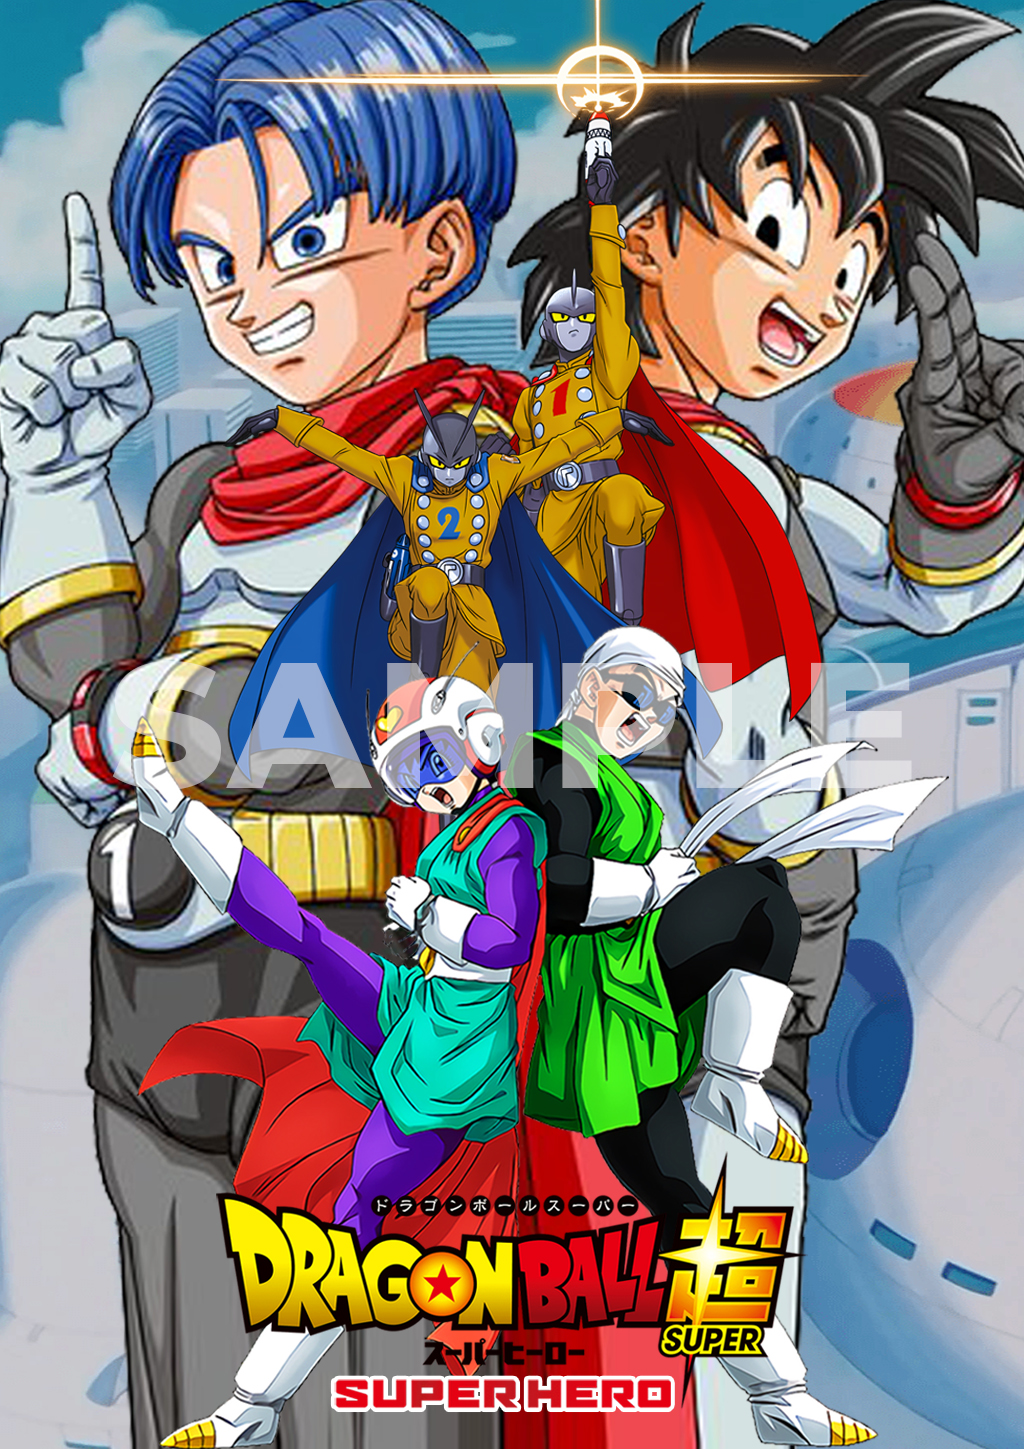 Dragon Ball Super Super Hero by AriezGao on DeviantArt